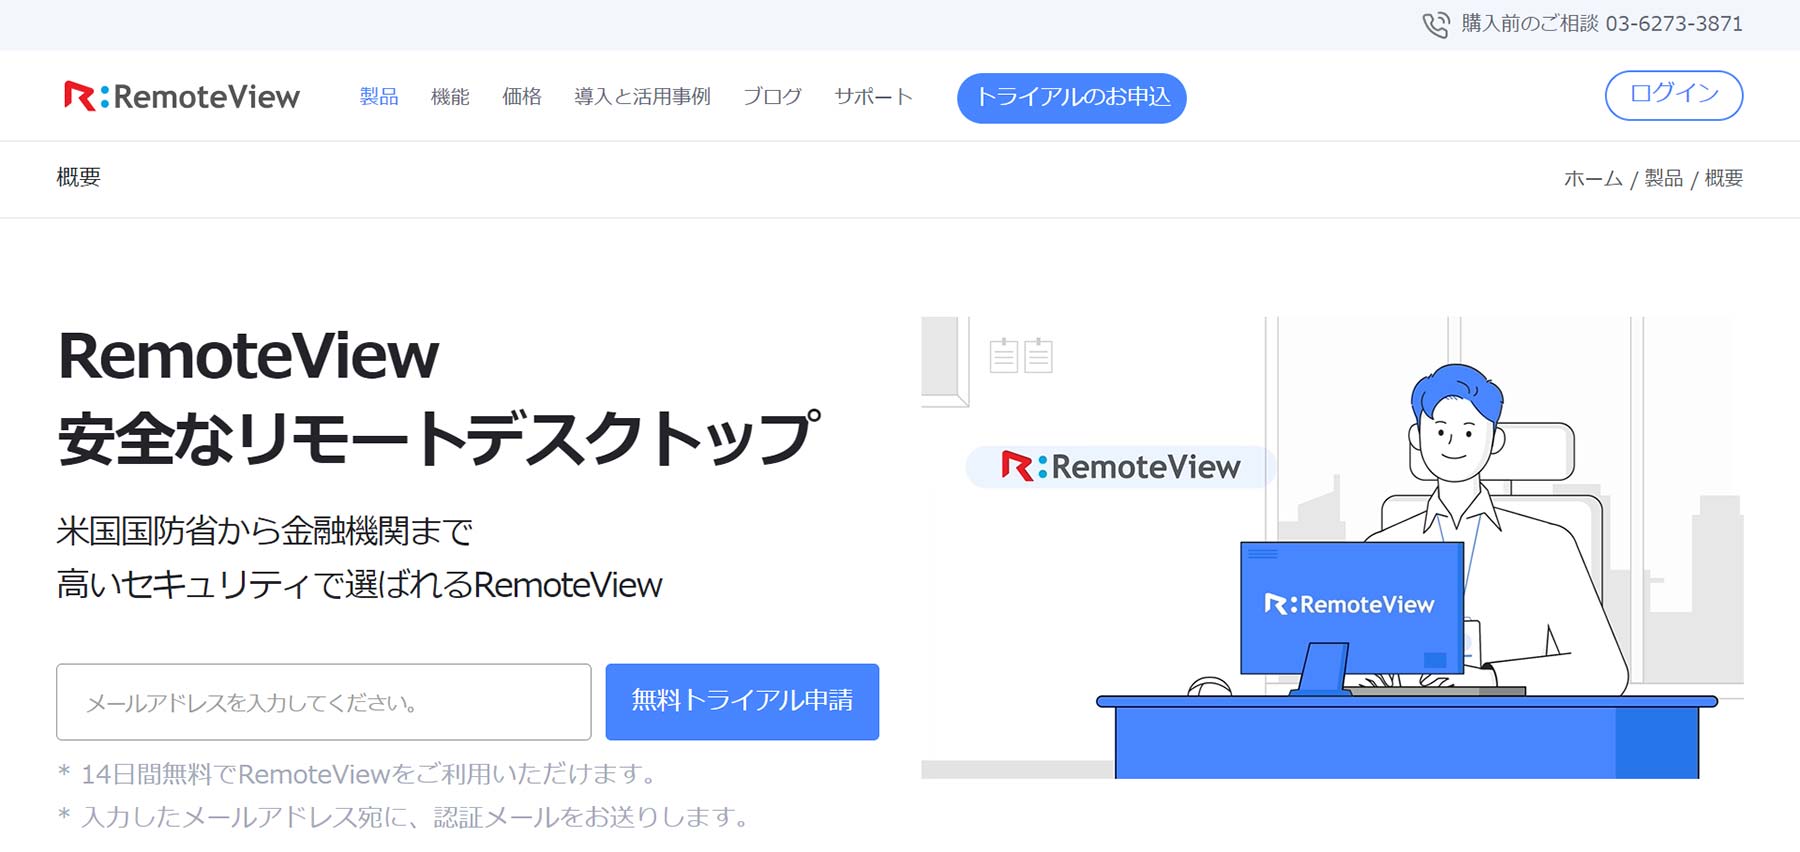 RemoteView公式Webサイト